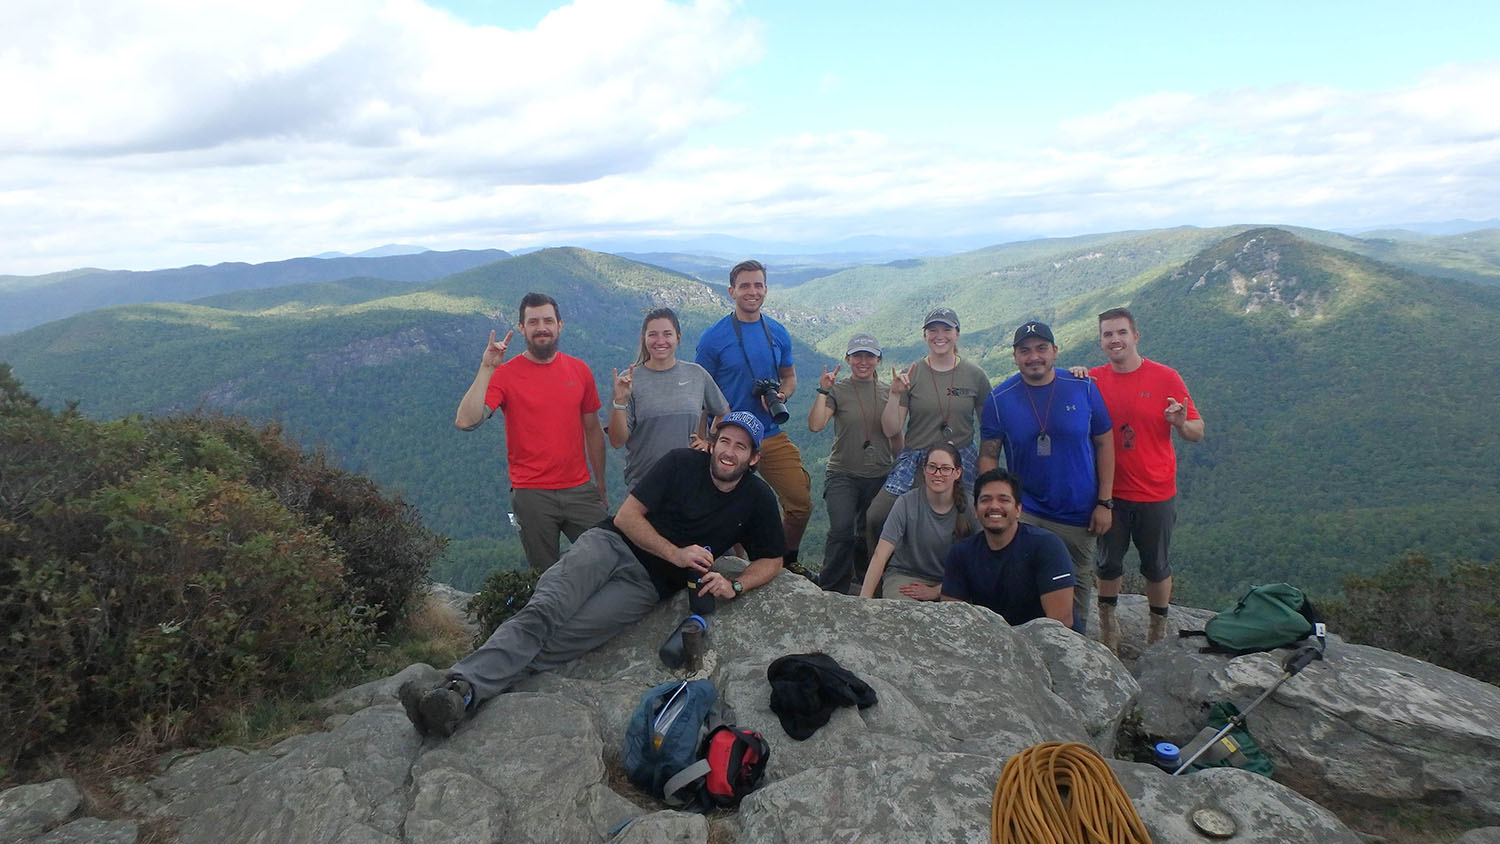 Veterans celebrate scaling a local mountain